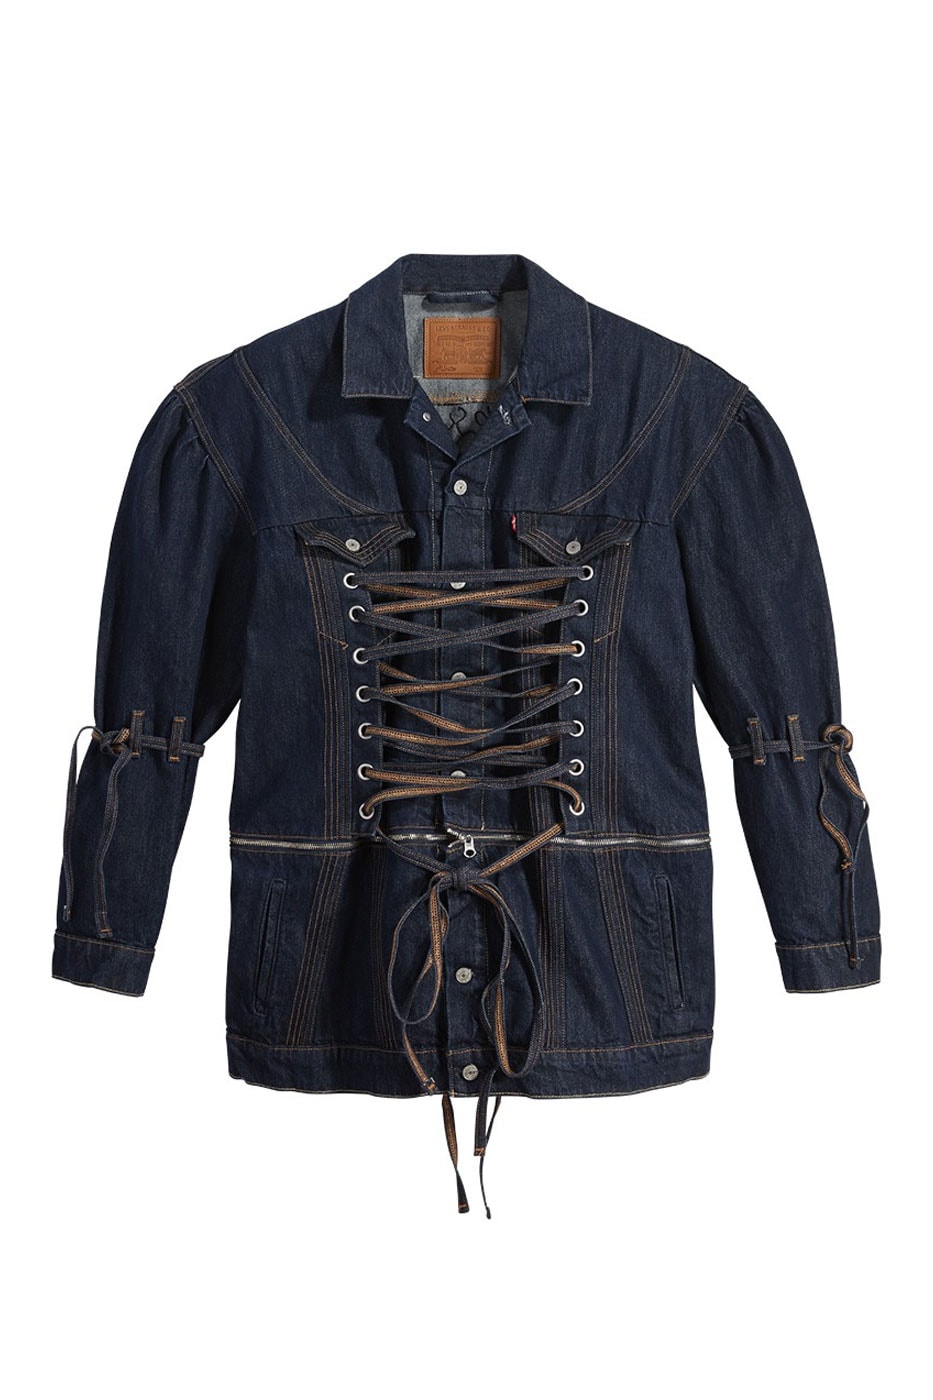 NO SESSO Levi's Unisex Denim Capsule baggy jeans flared indigo dark wash corset trucker zipper release info date price capsule